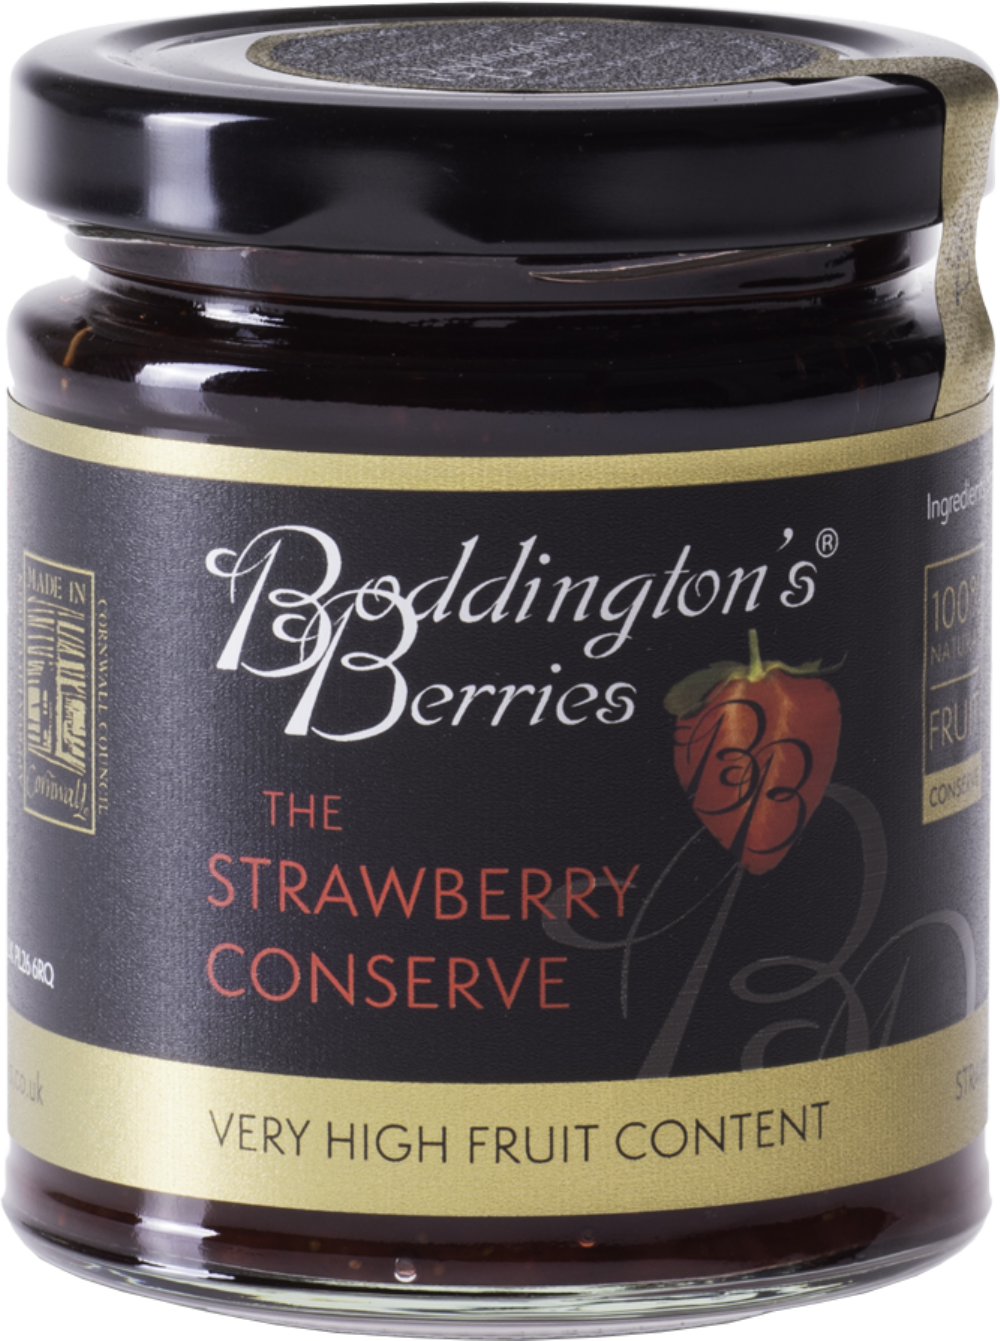 BODDINGTON'S BERRIES Strawberry Conserve 227g